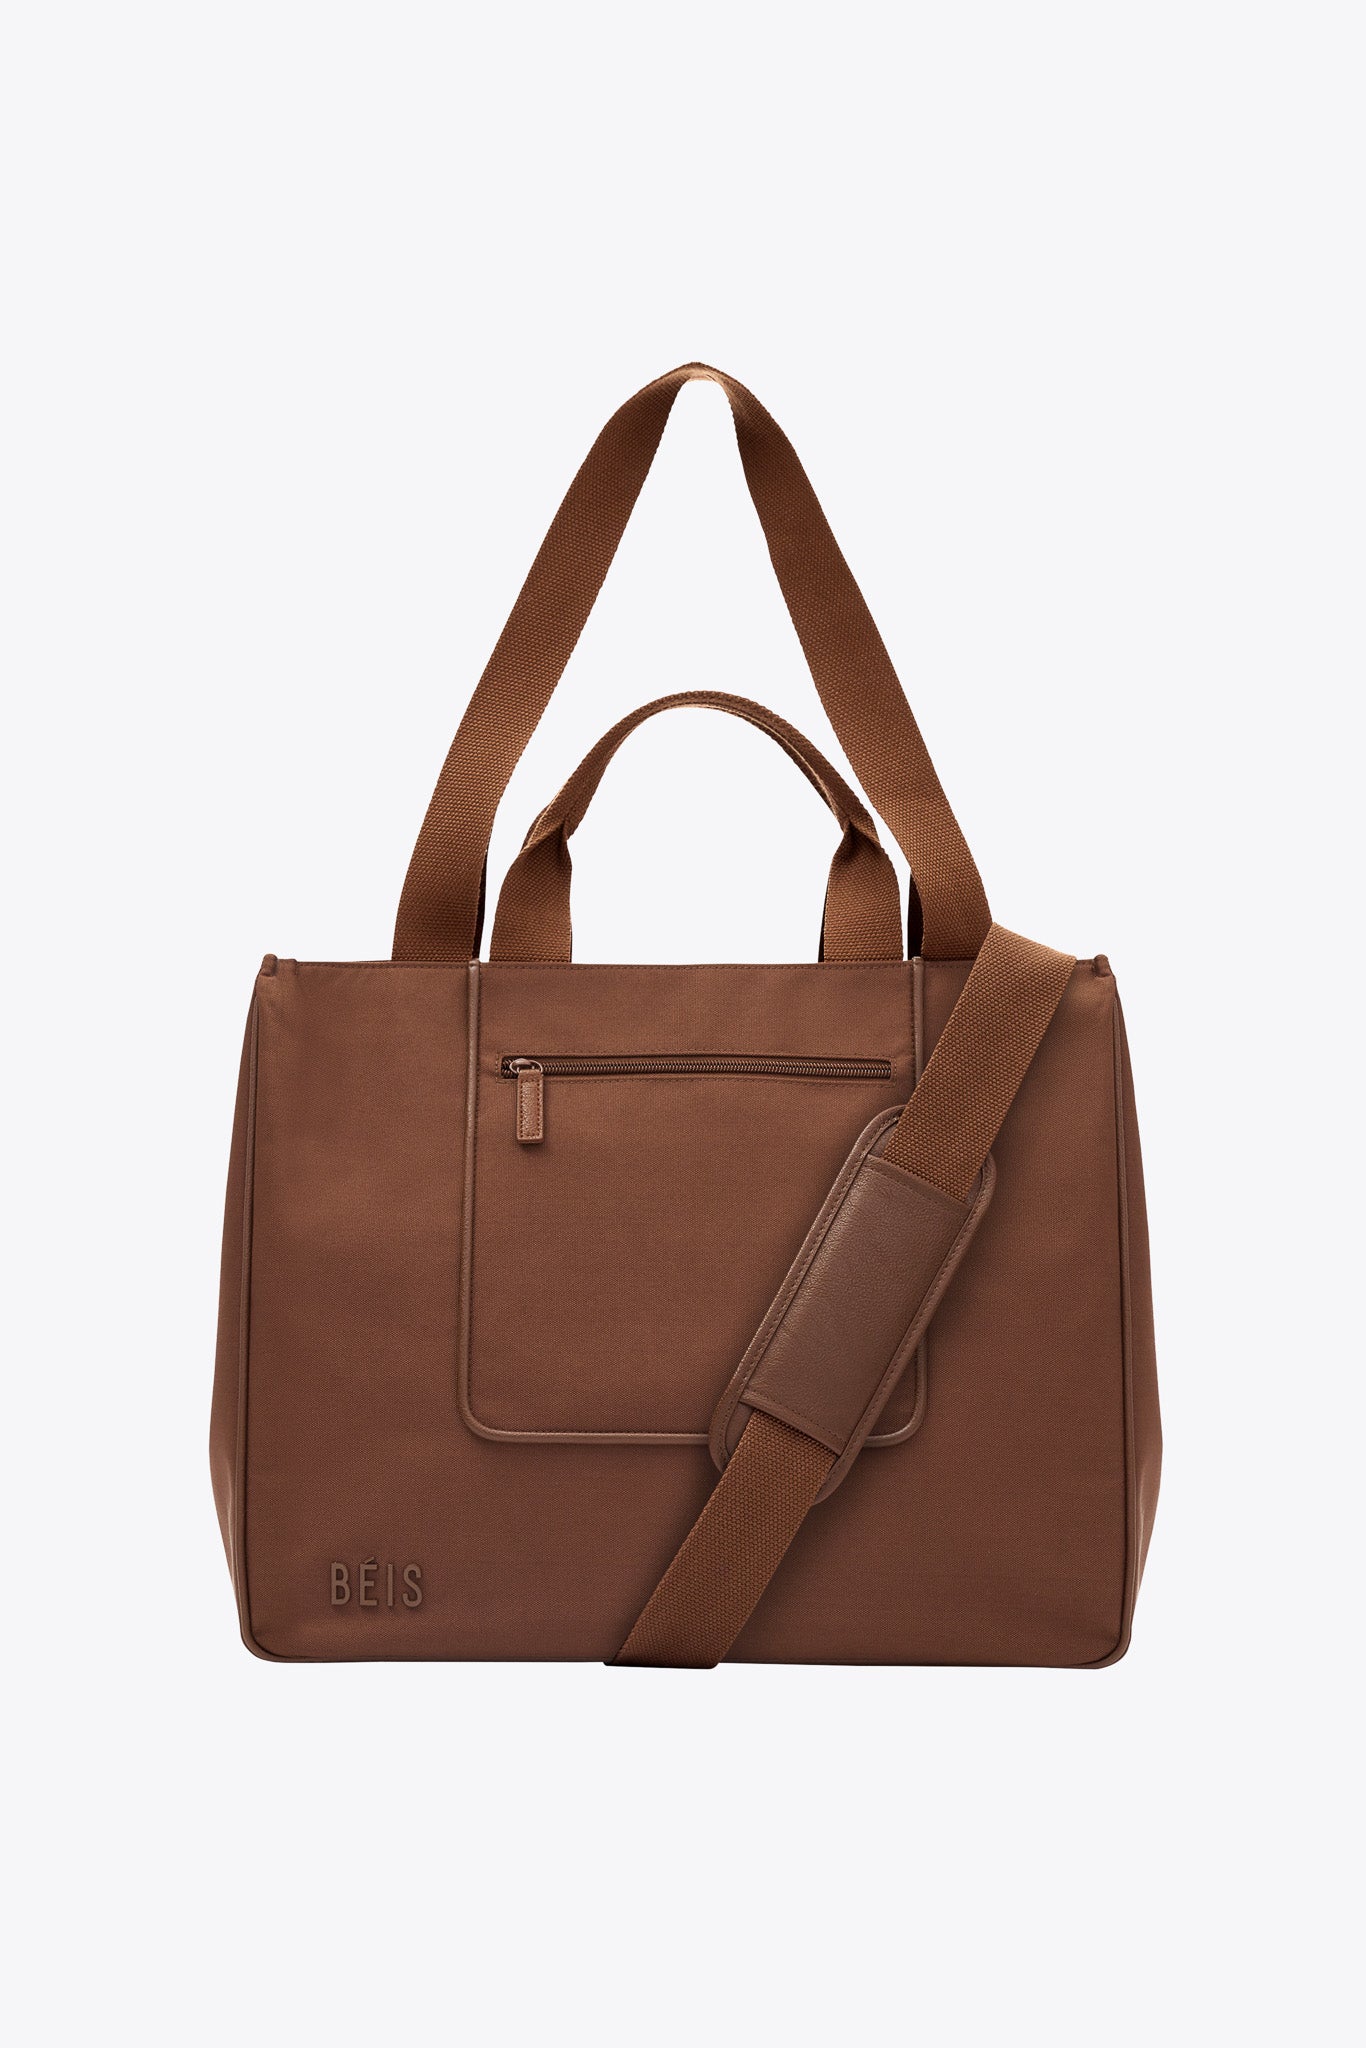 Carry-On Everyday Bag, Leather Tote Bag For Woman, Laptop Tote Bag, Custom  Shoulder Bag at Rs 1250 | Shakti Nagar | New Delhi | ID: 2850498743262